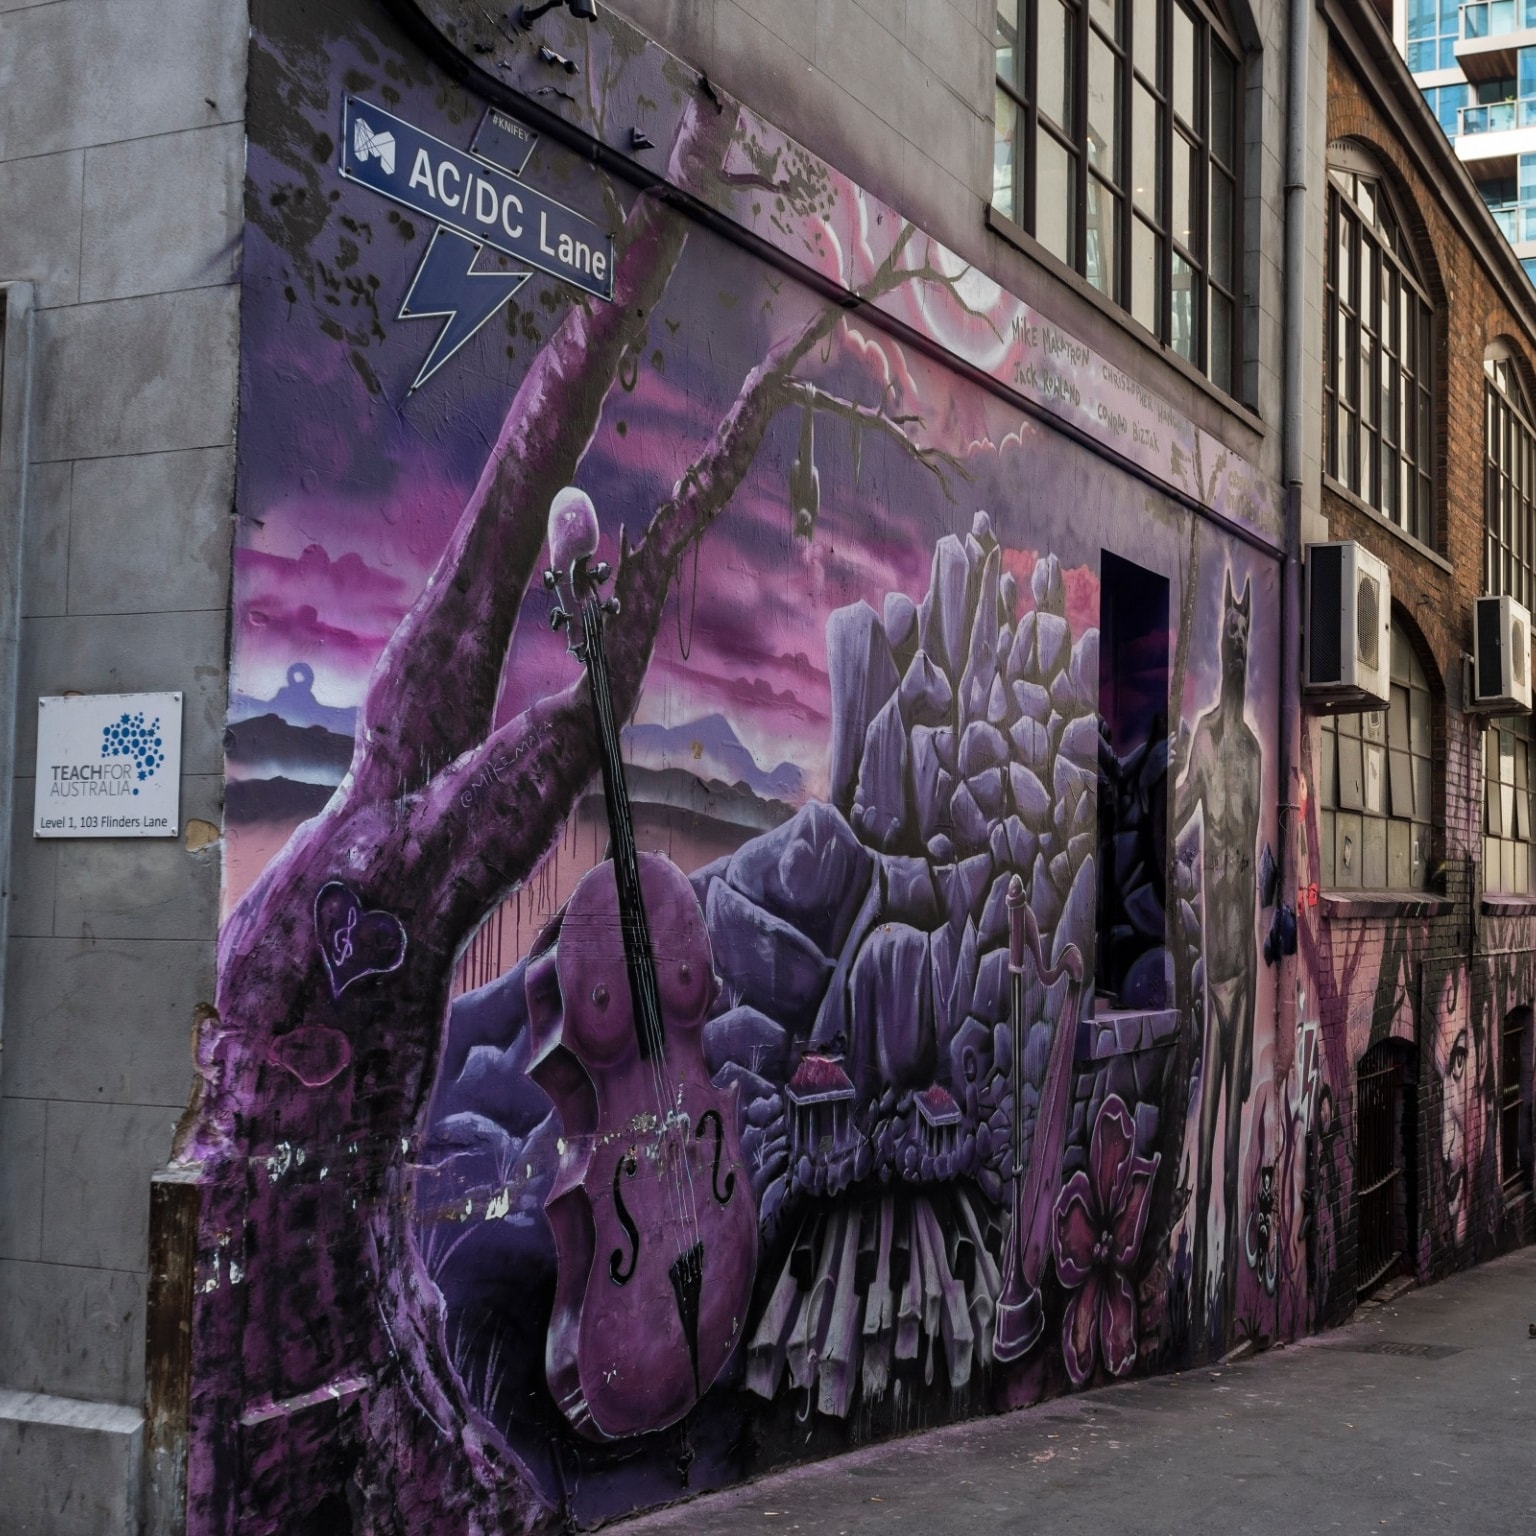 ACDC Lane penuh grafiti di Melbourne © Visit Victoria